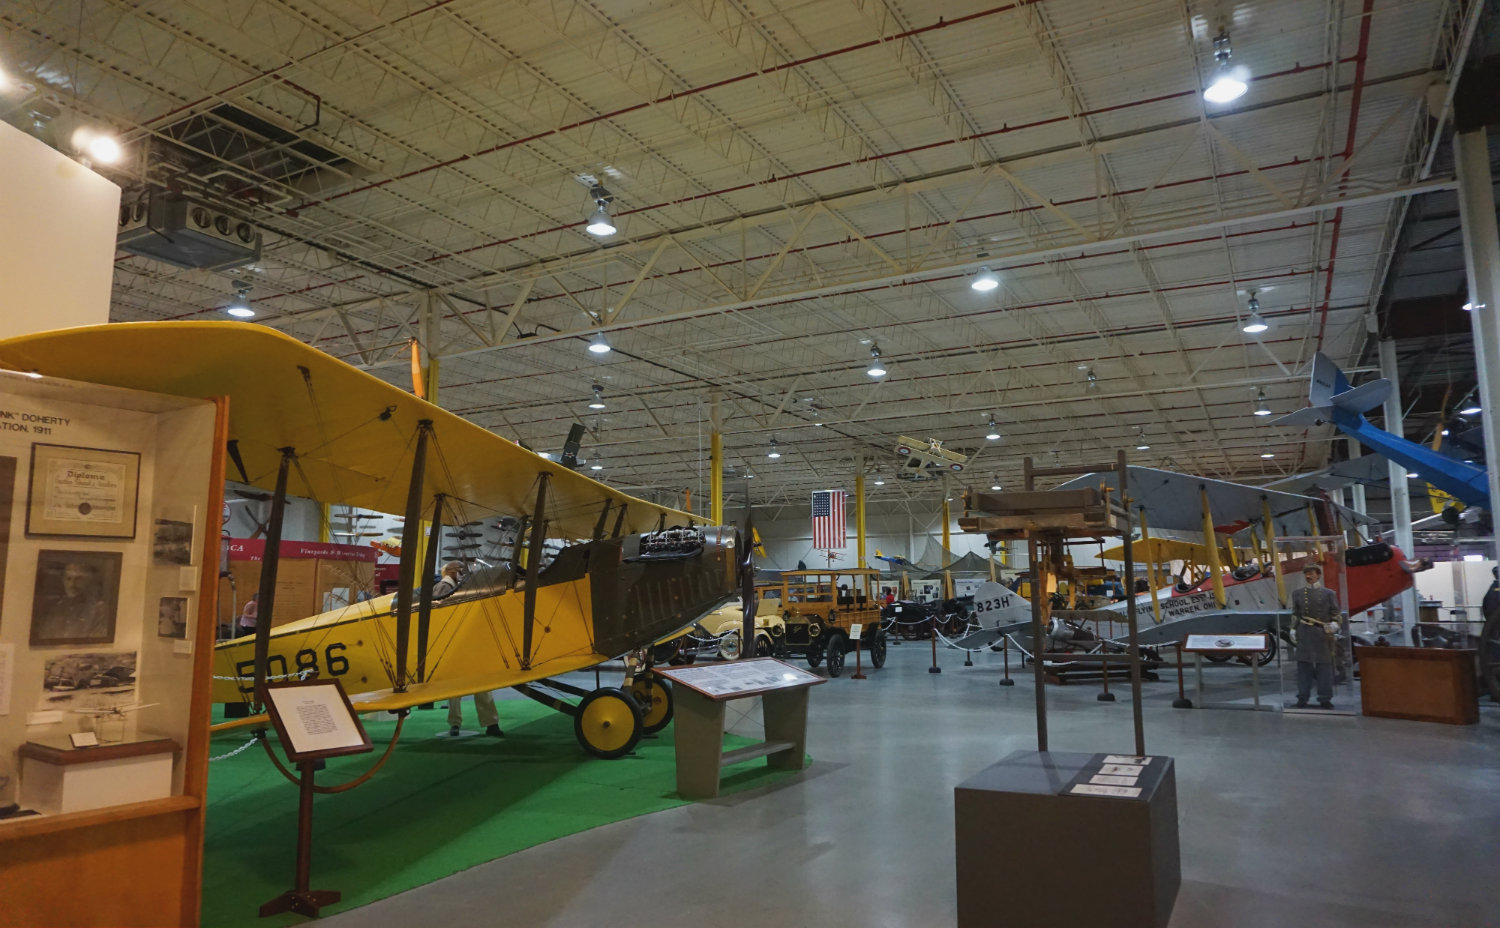 Glenn Curtiss Museum - Featured Image